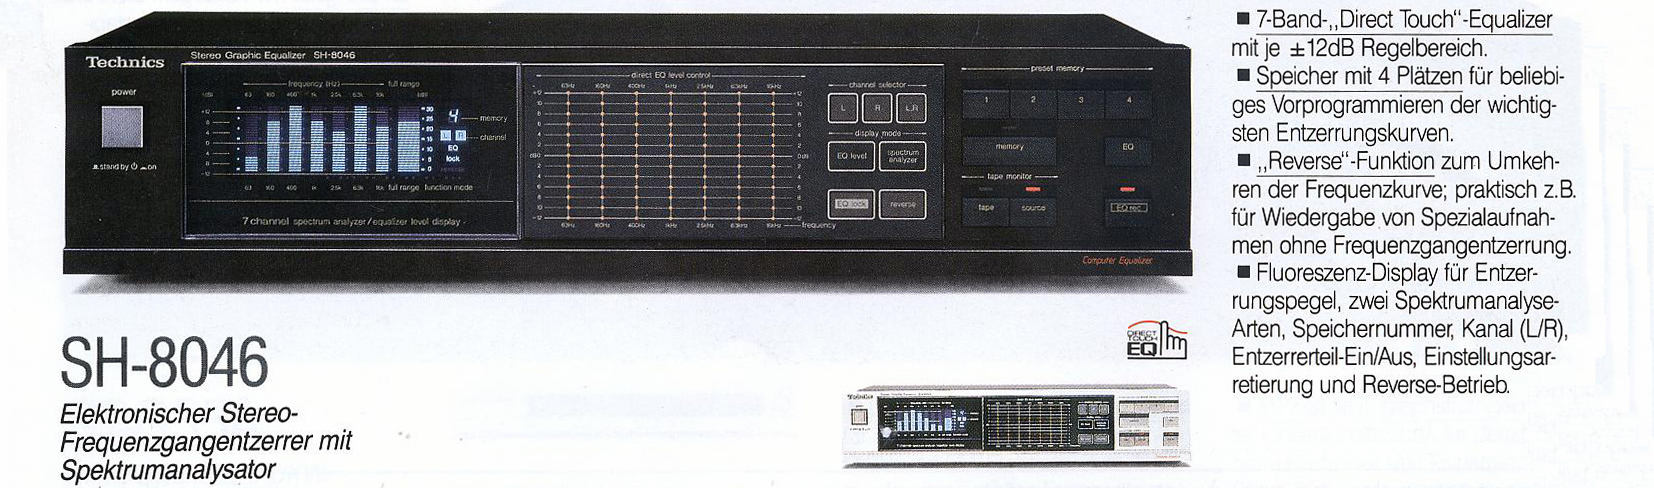 Technics SH-8046-Prospekt-1988.jpg